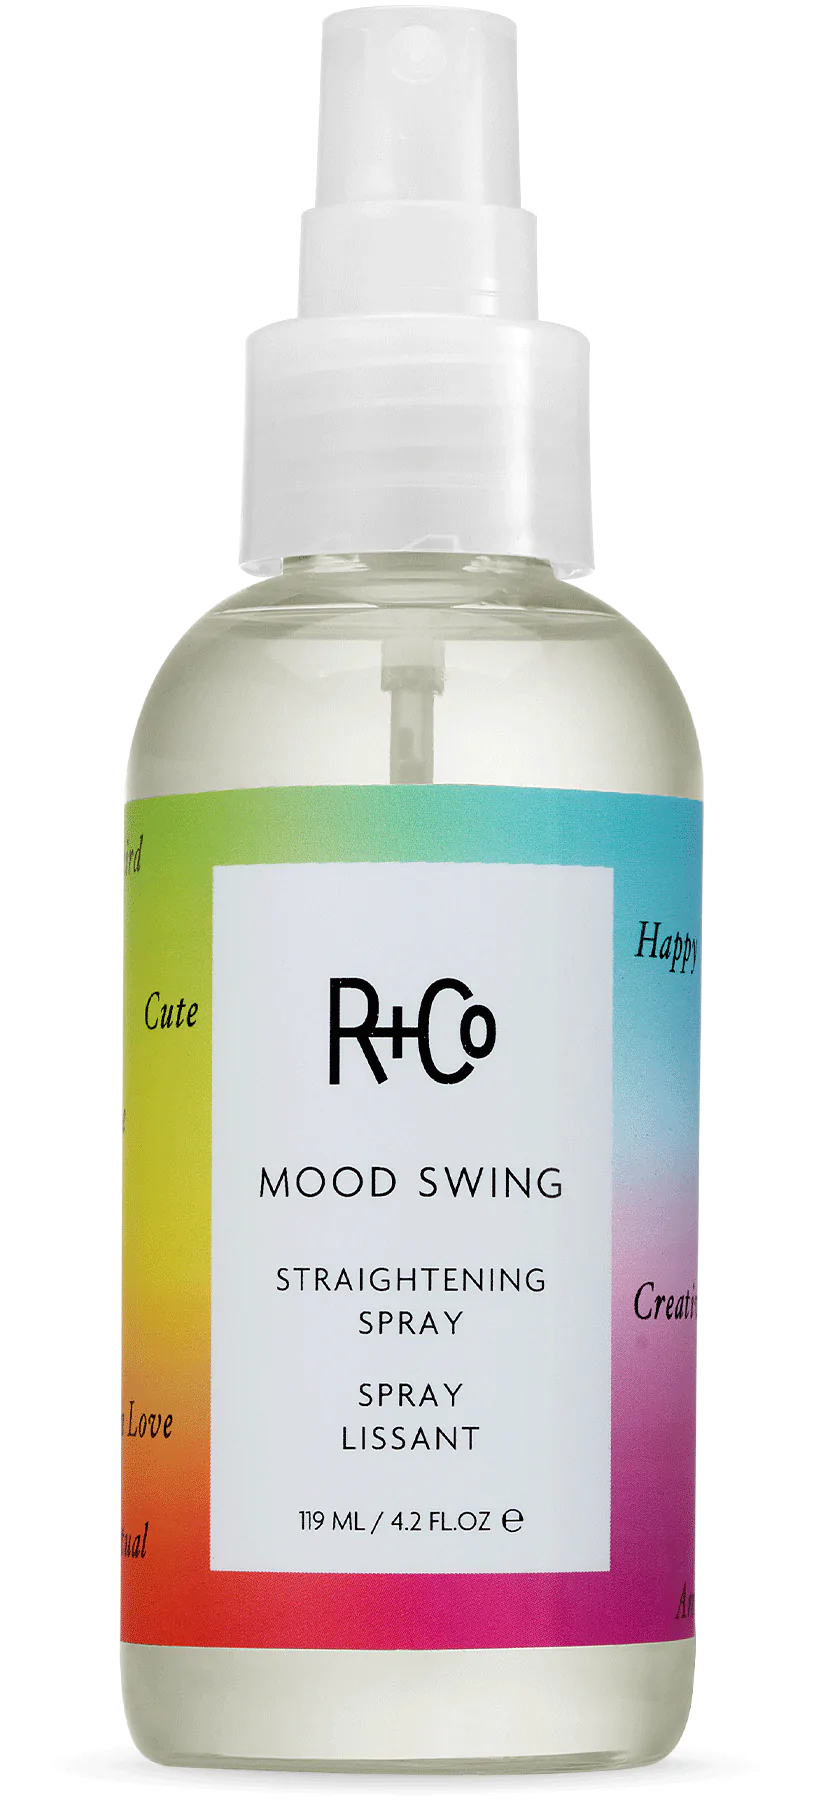 R + Co Mood Swing Straightening Spray